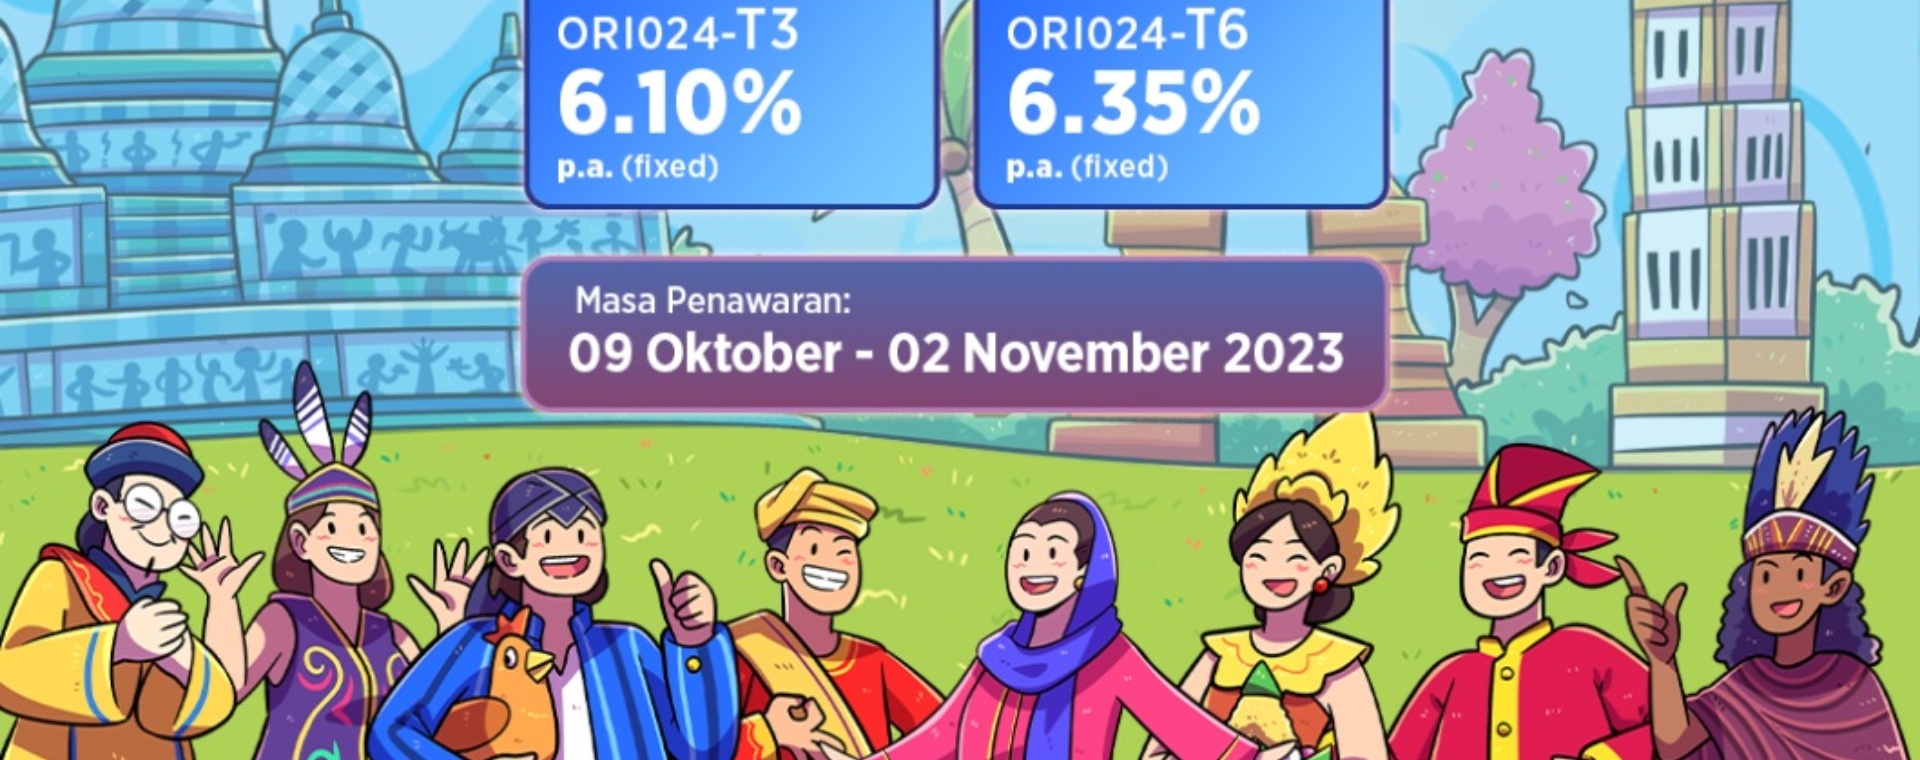 Obligasi Ritel Indonesia ORI024T3 dan ORI024T6 ditawarkan mulai 9 Oktober 2023 hingga 2 November 2023